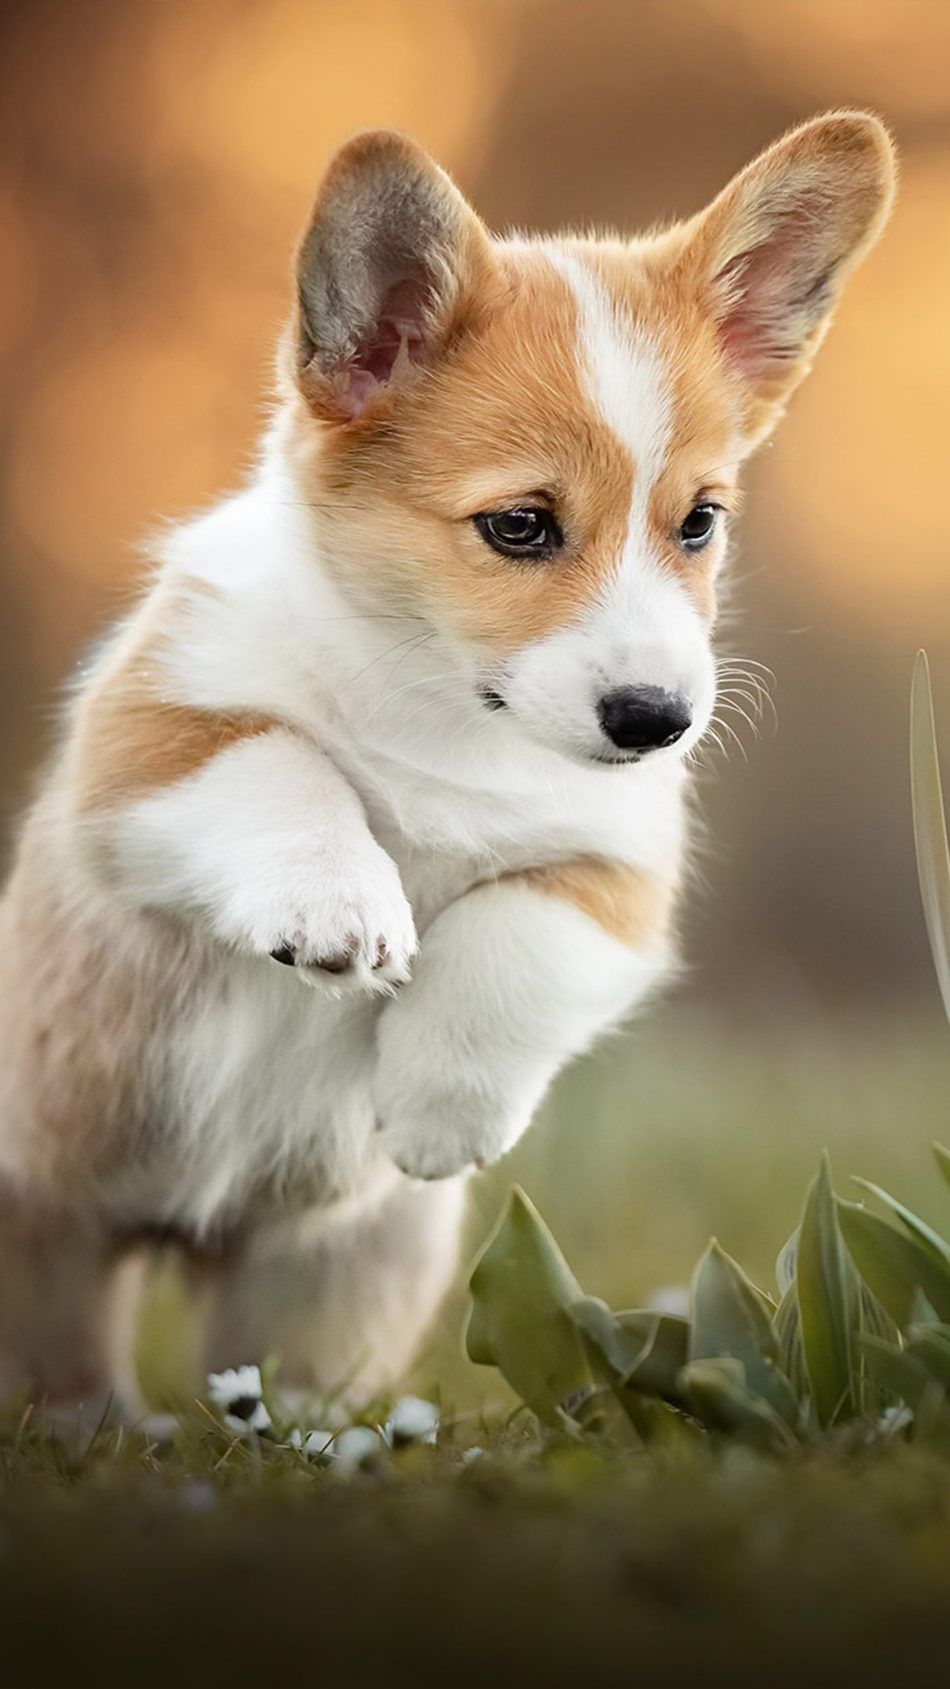 Corgi Puppy Pet Dog 4K Ultra HD Mobile Wallpaper. Cute puppy wallpaper, Corgi puppy, Cute dog wallpaper